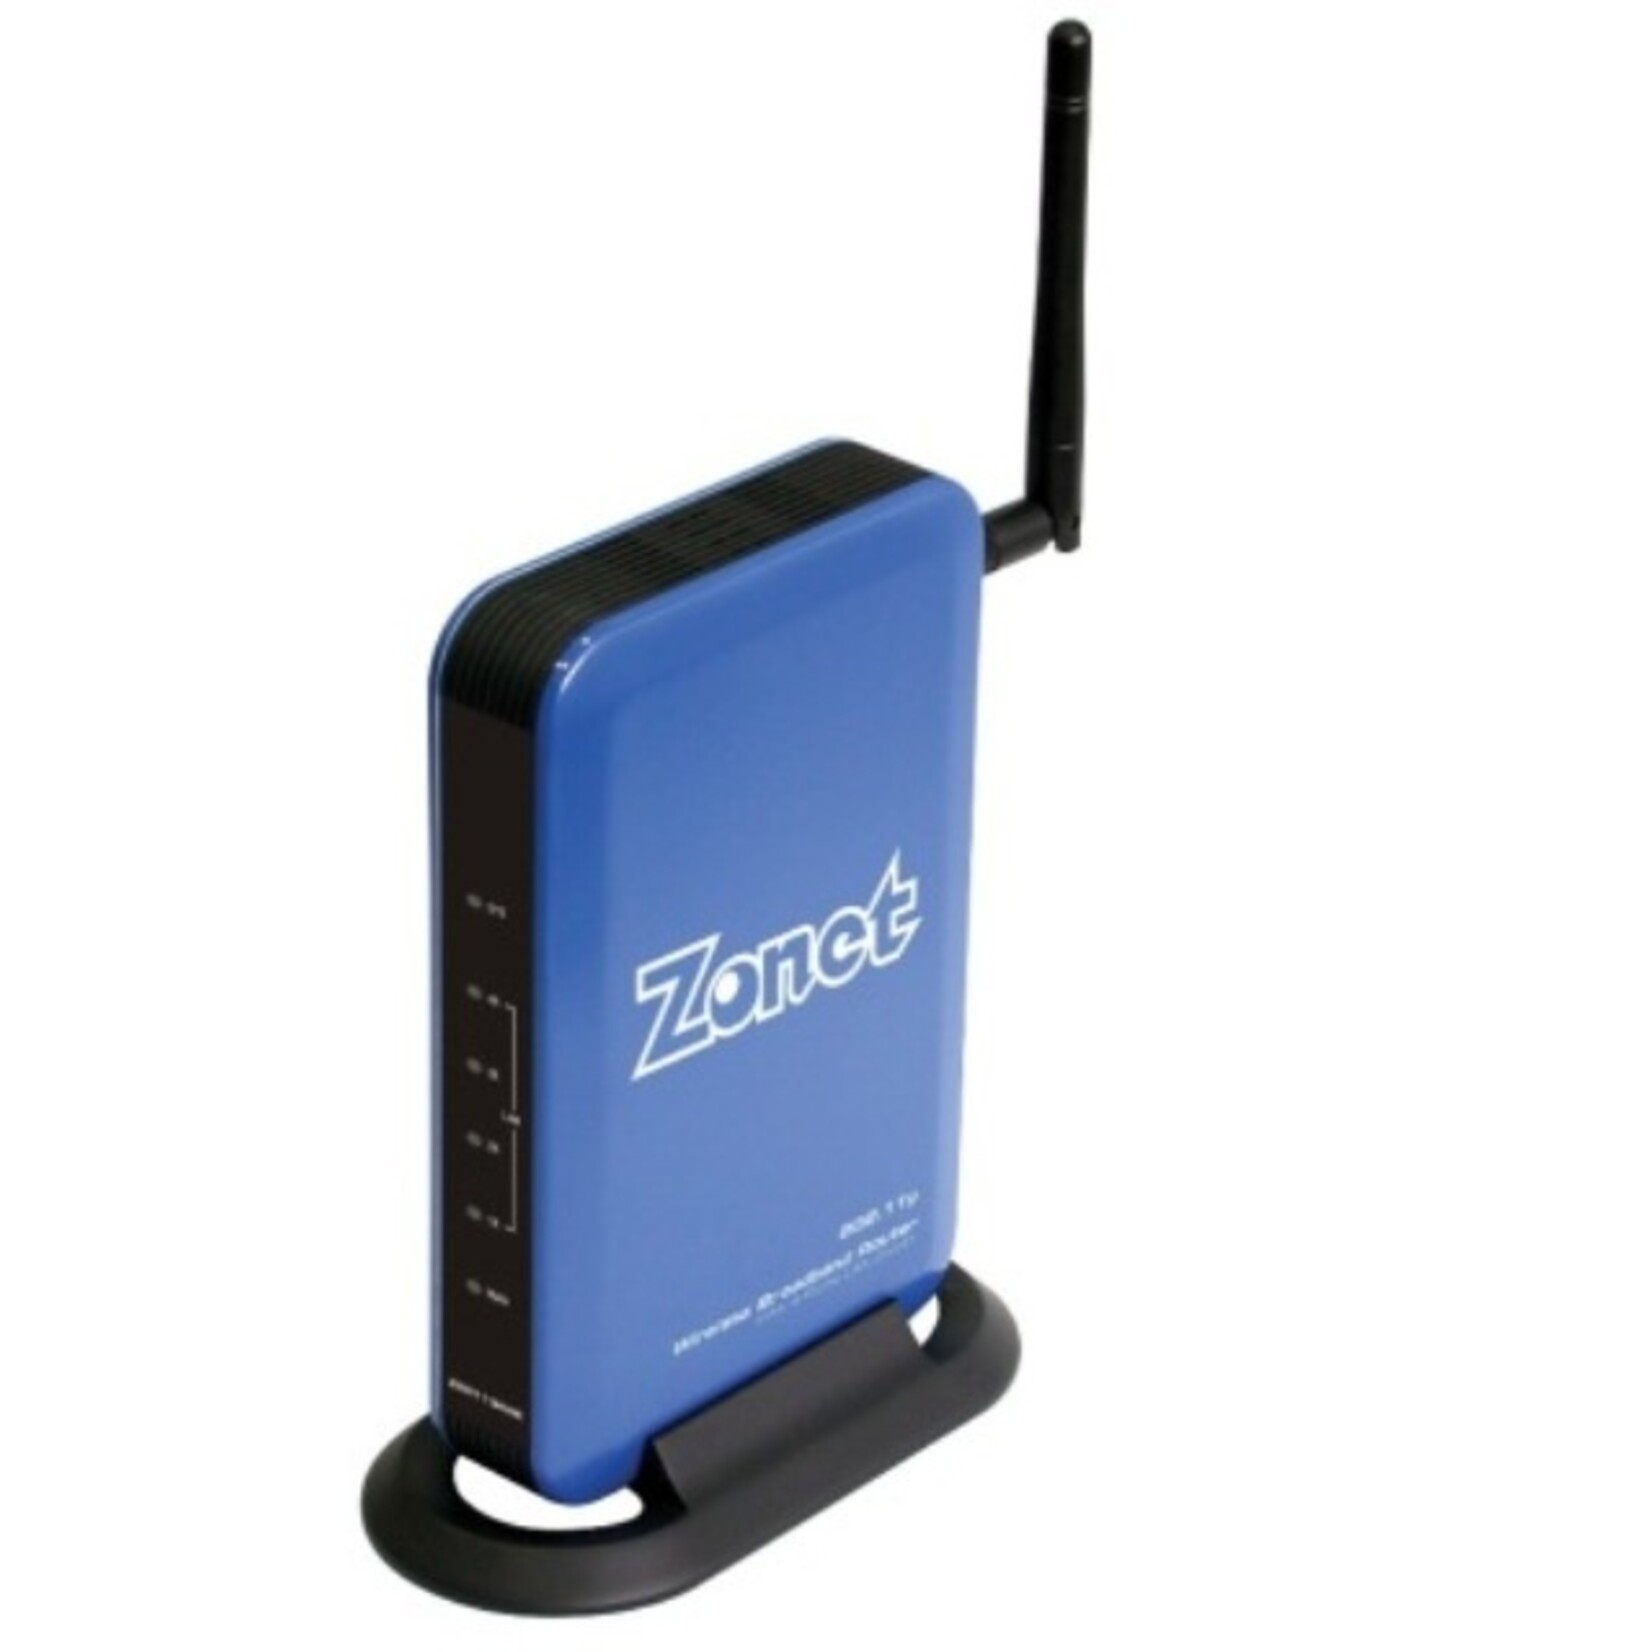 Zonet Wireless N300 Router